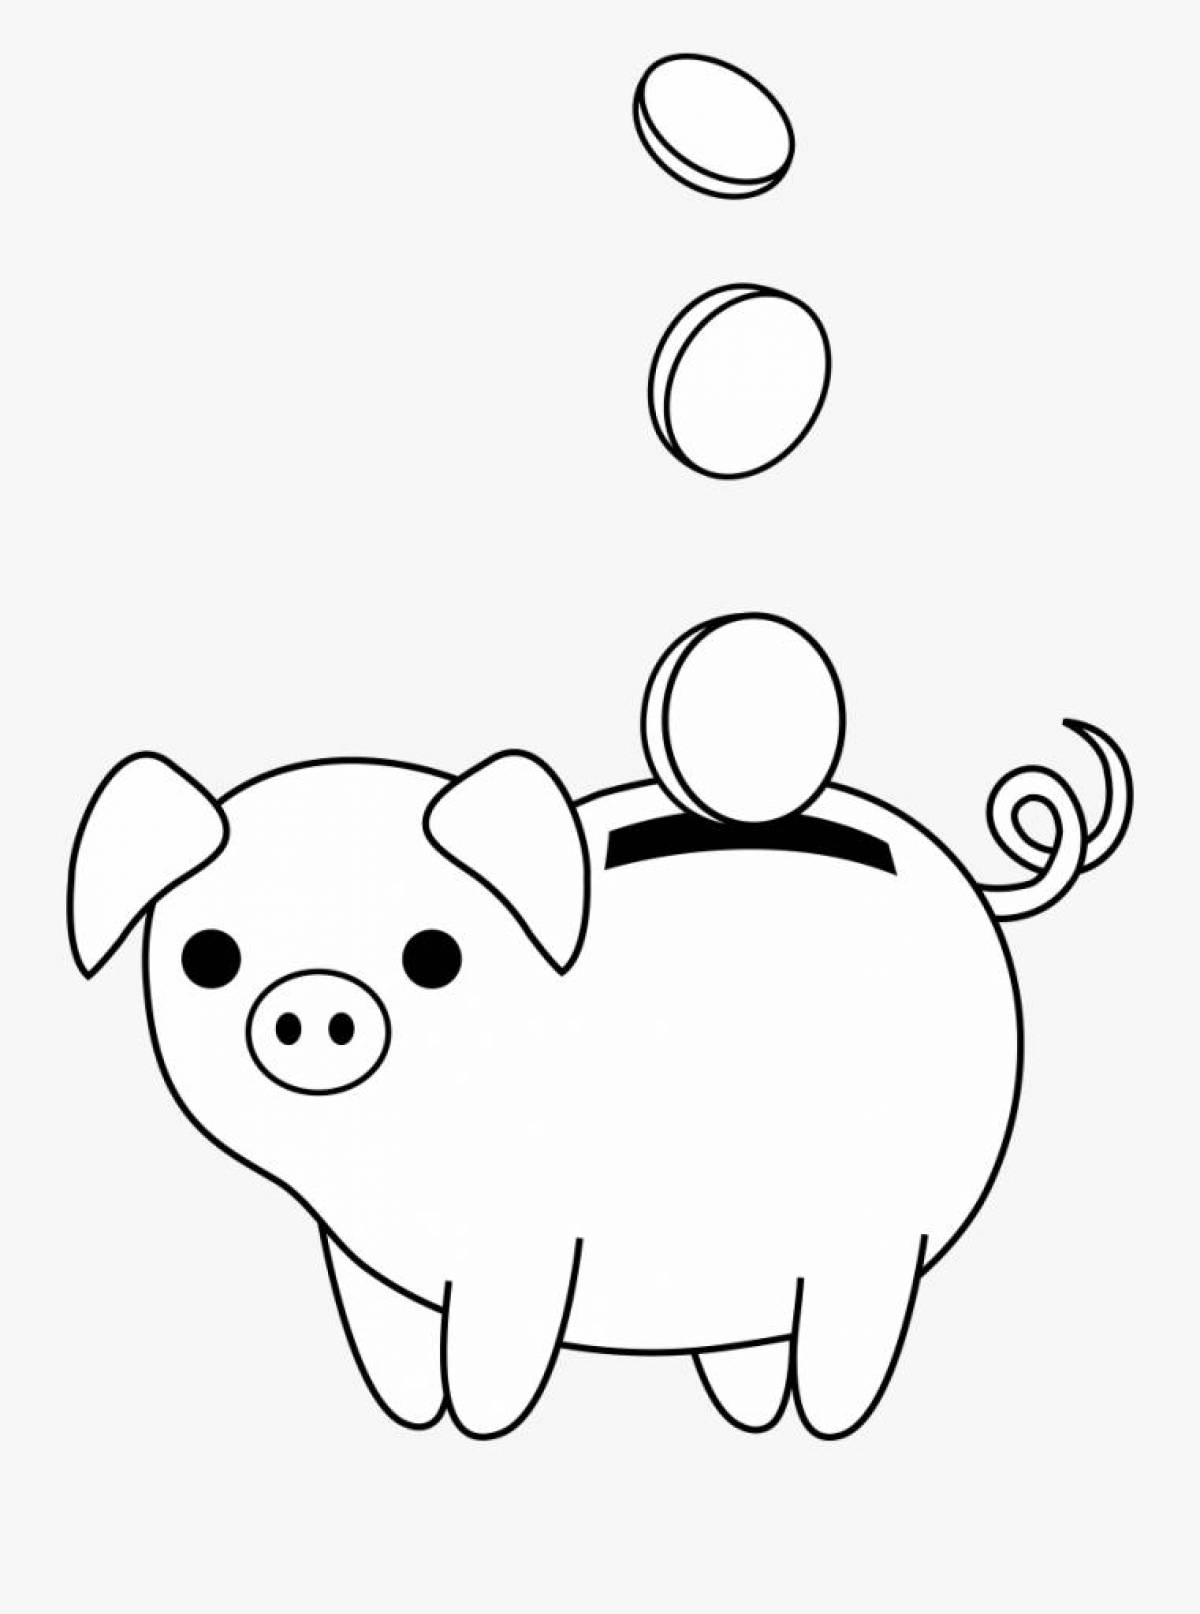 Fun piggy bank coloring book